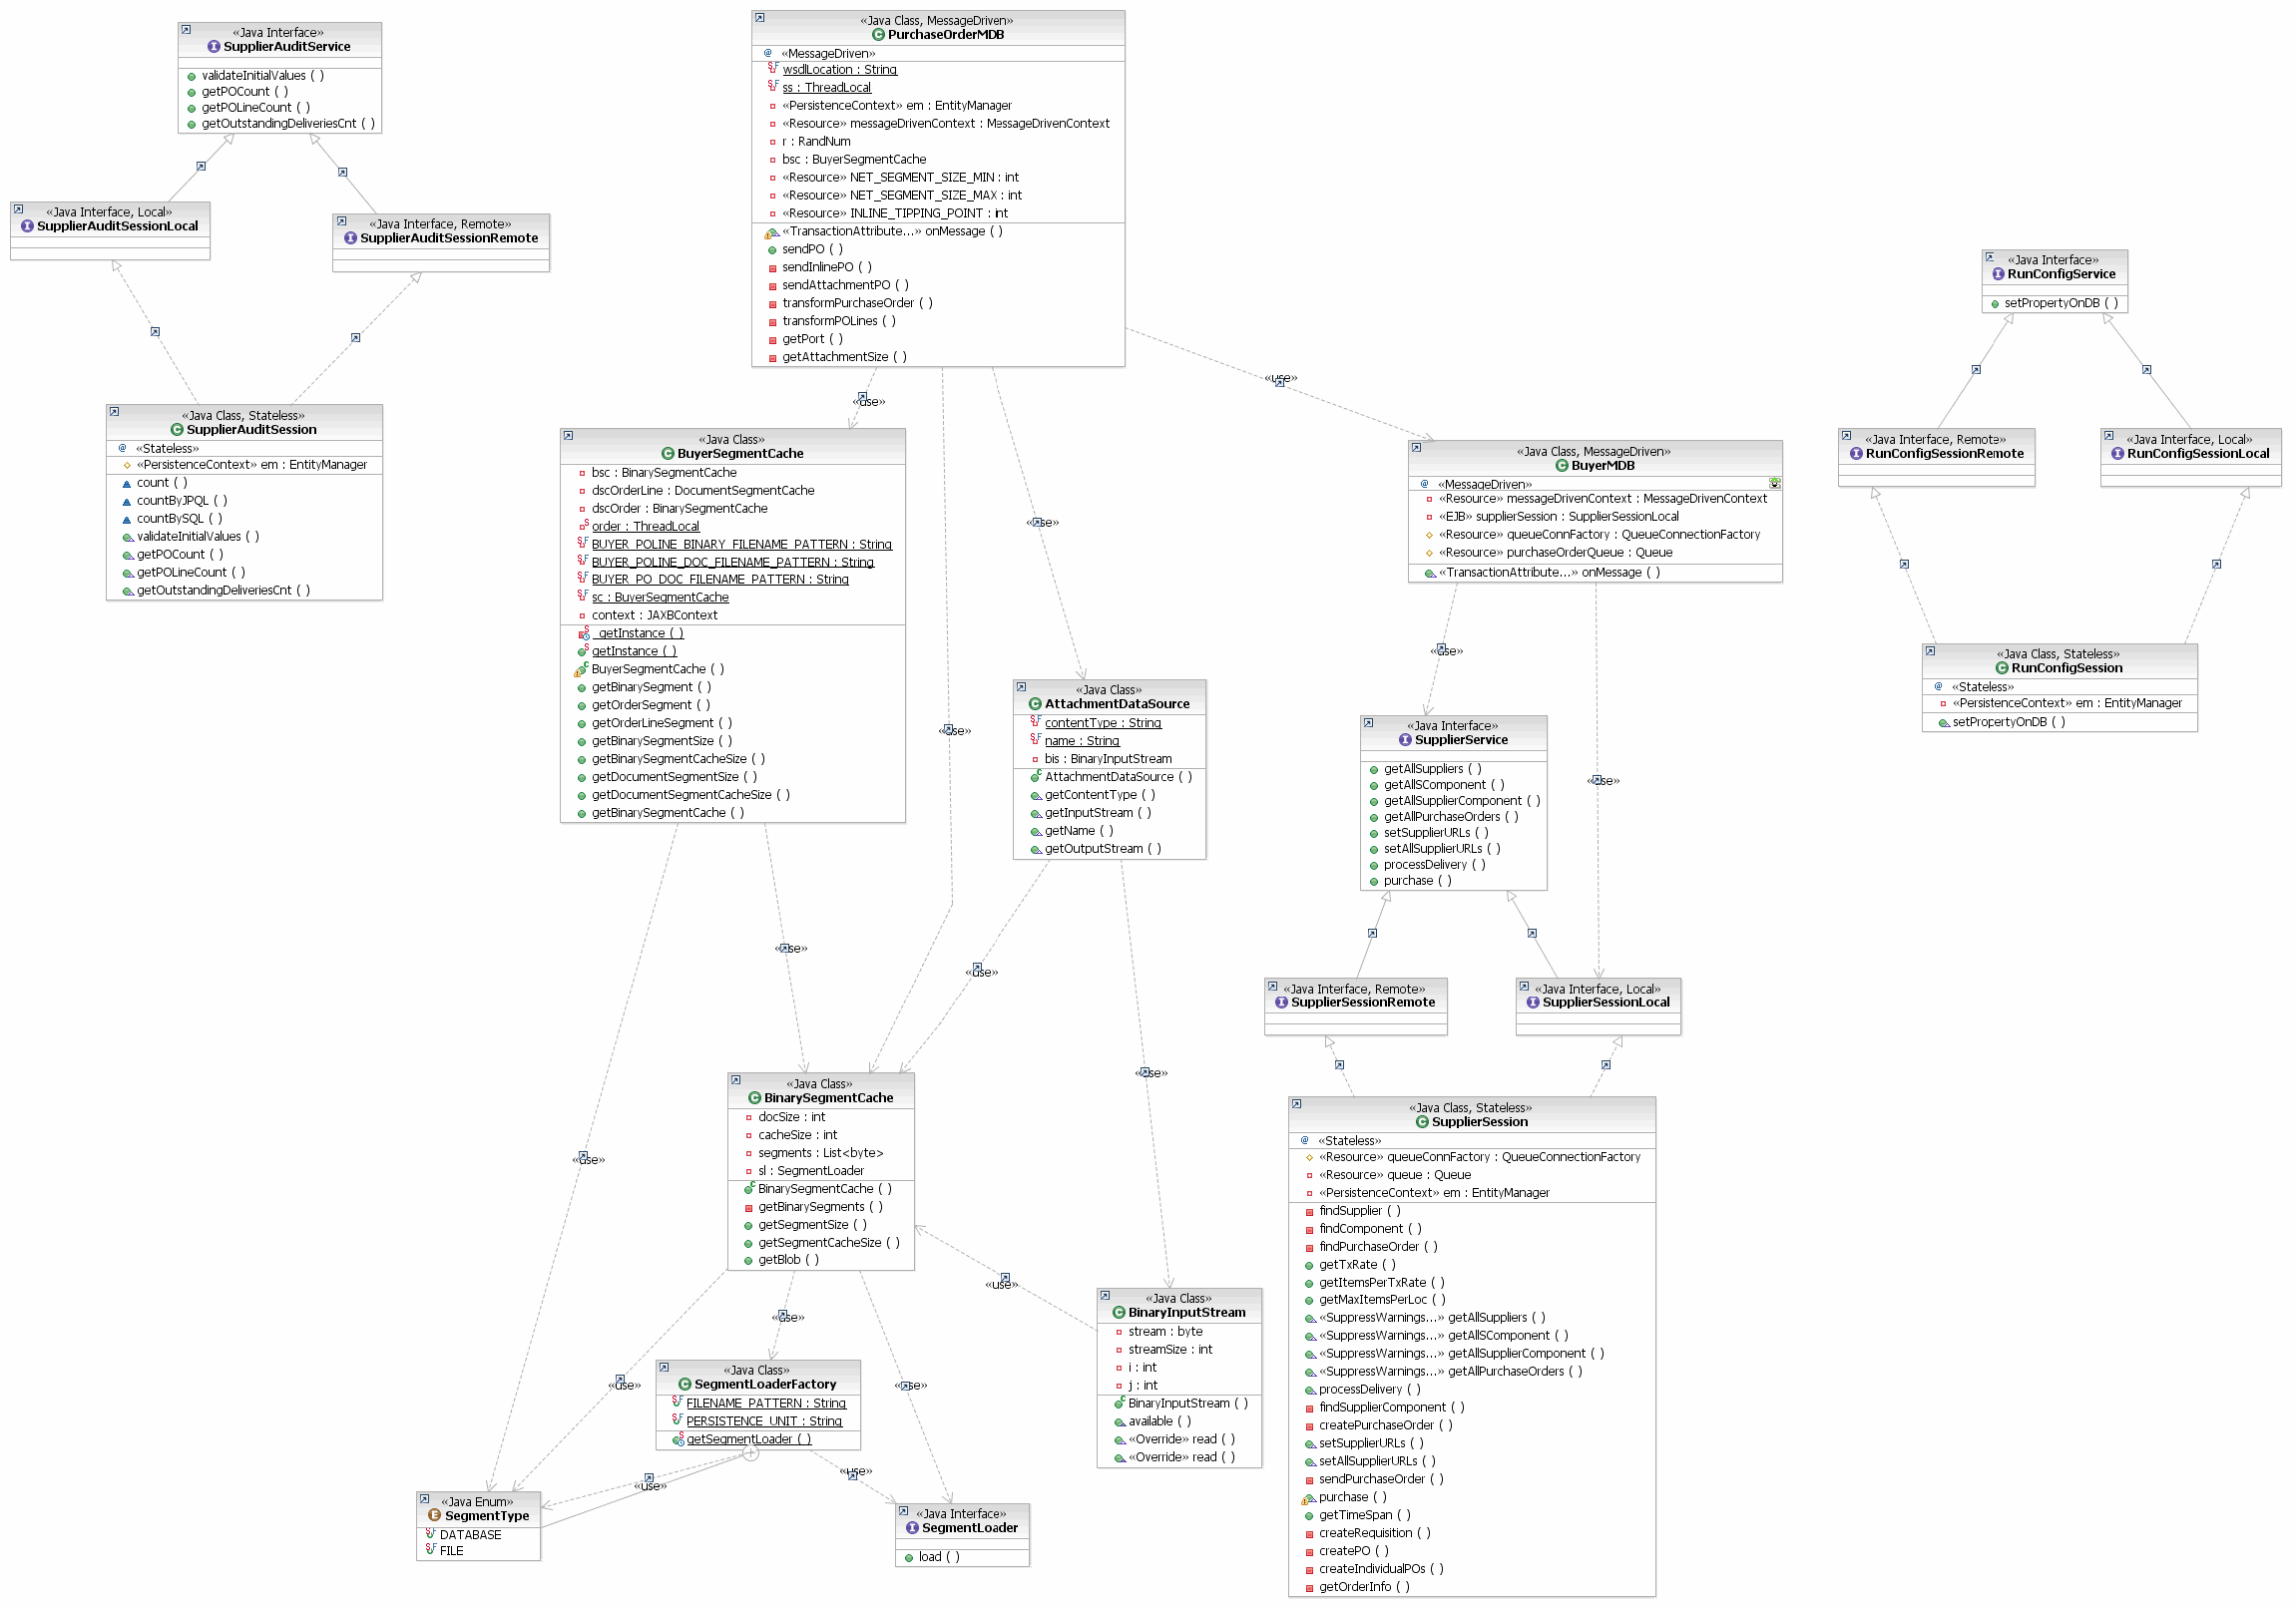 UML diagram for the Supplier Domain